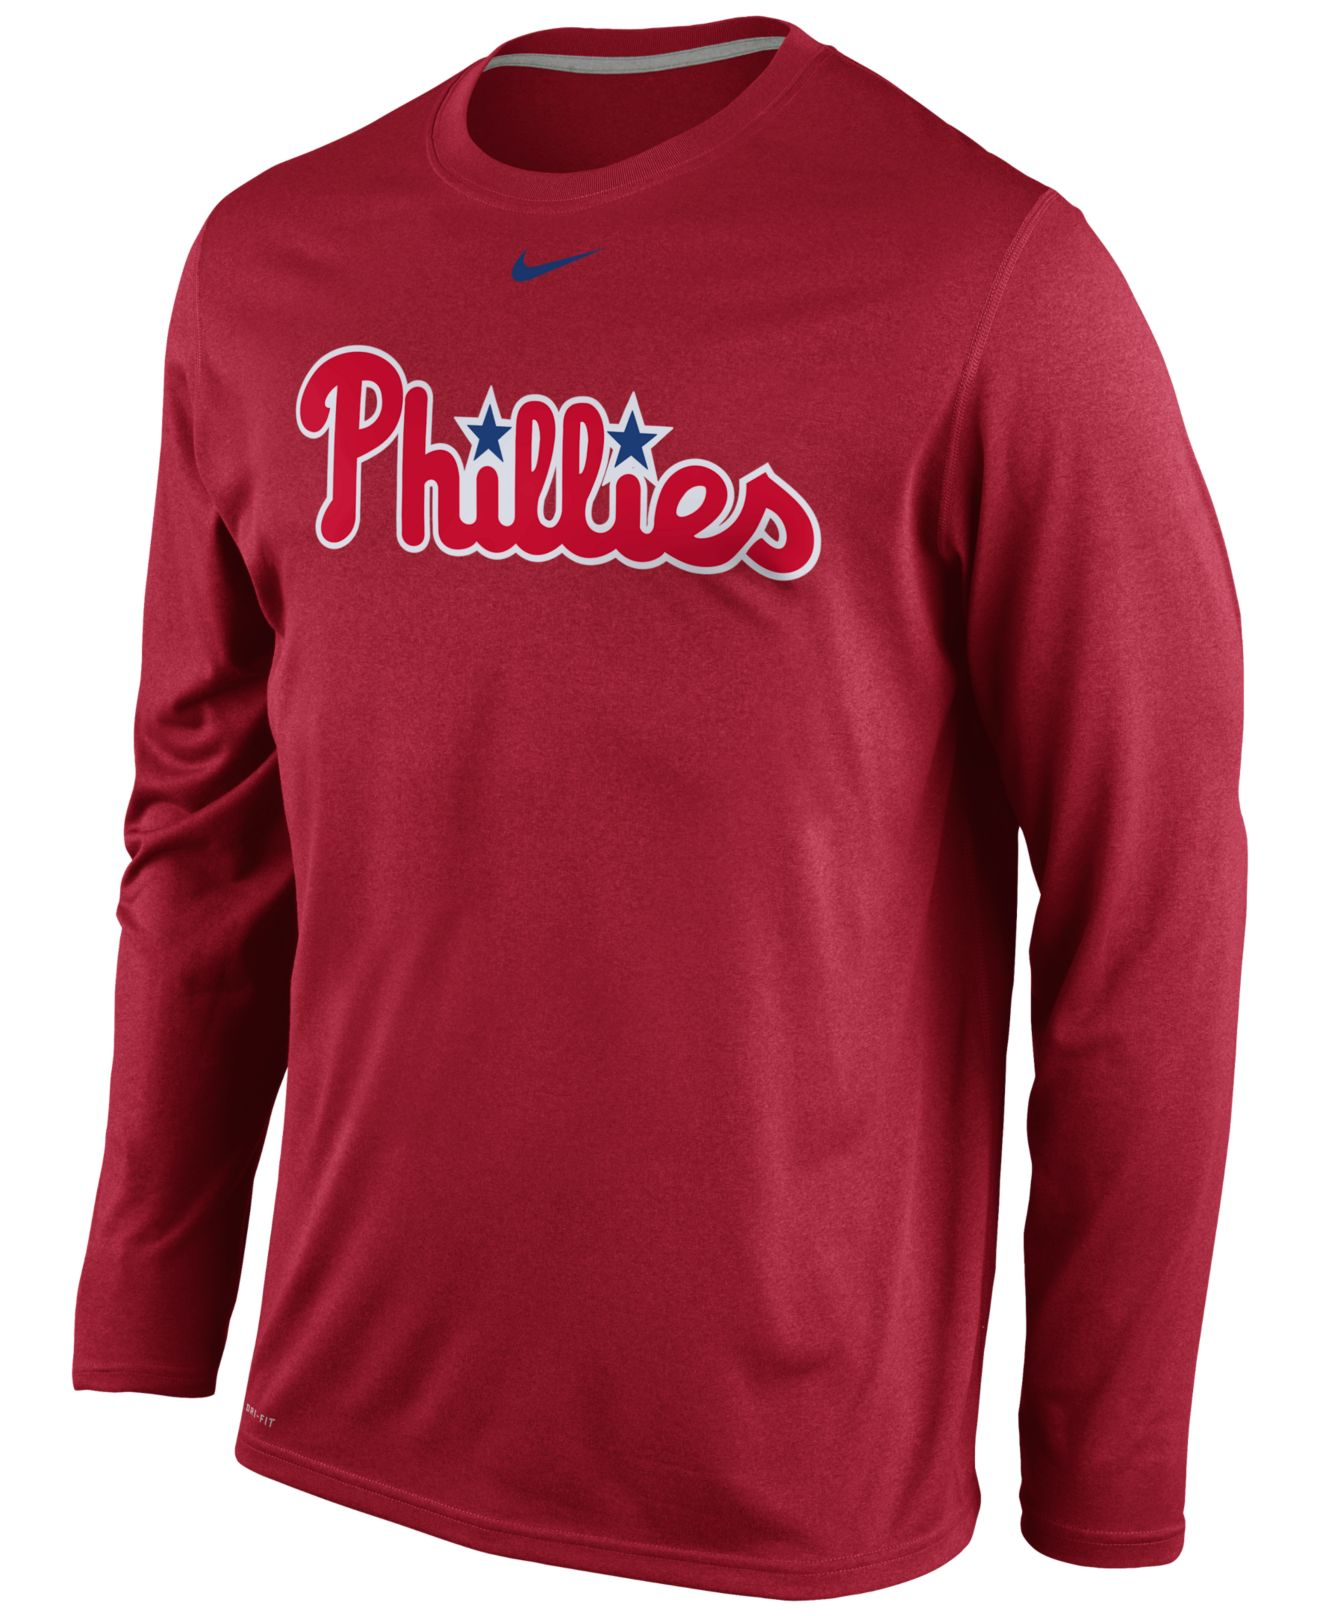 Lyst - Nike Men's Long-sleeve Philadelphia Phillies Legend T-shirt in ...